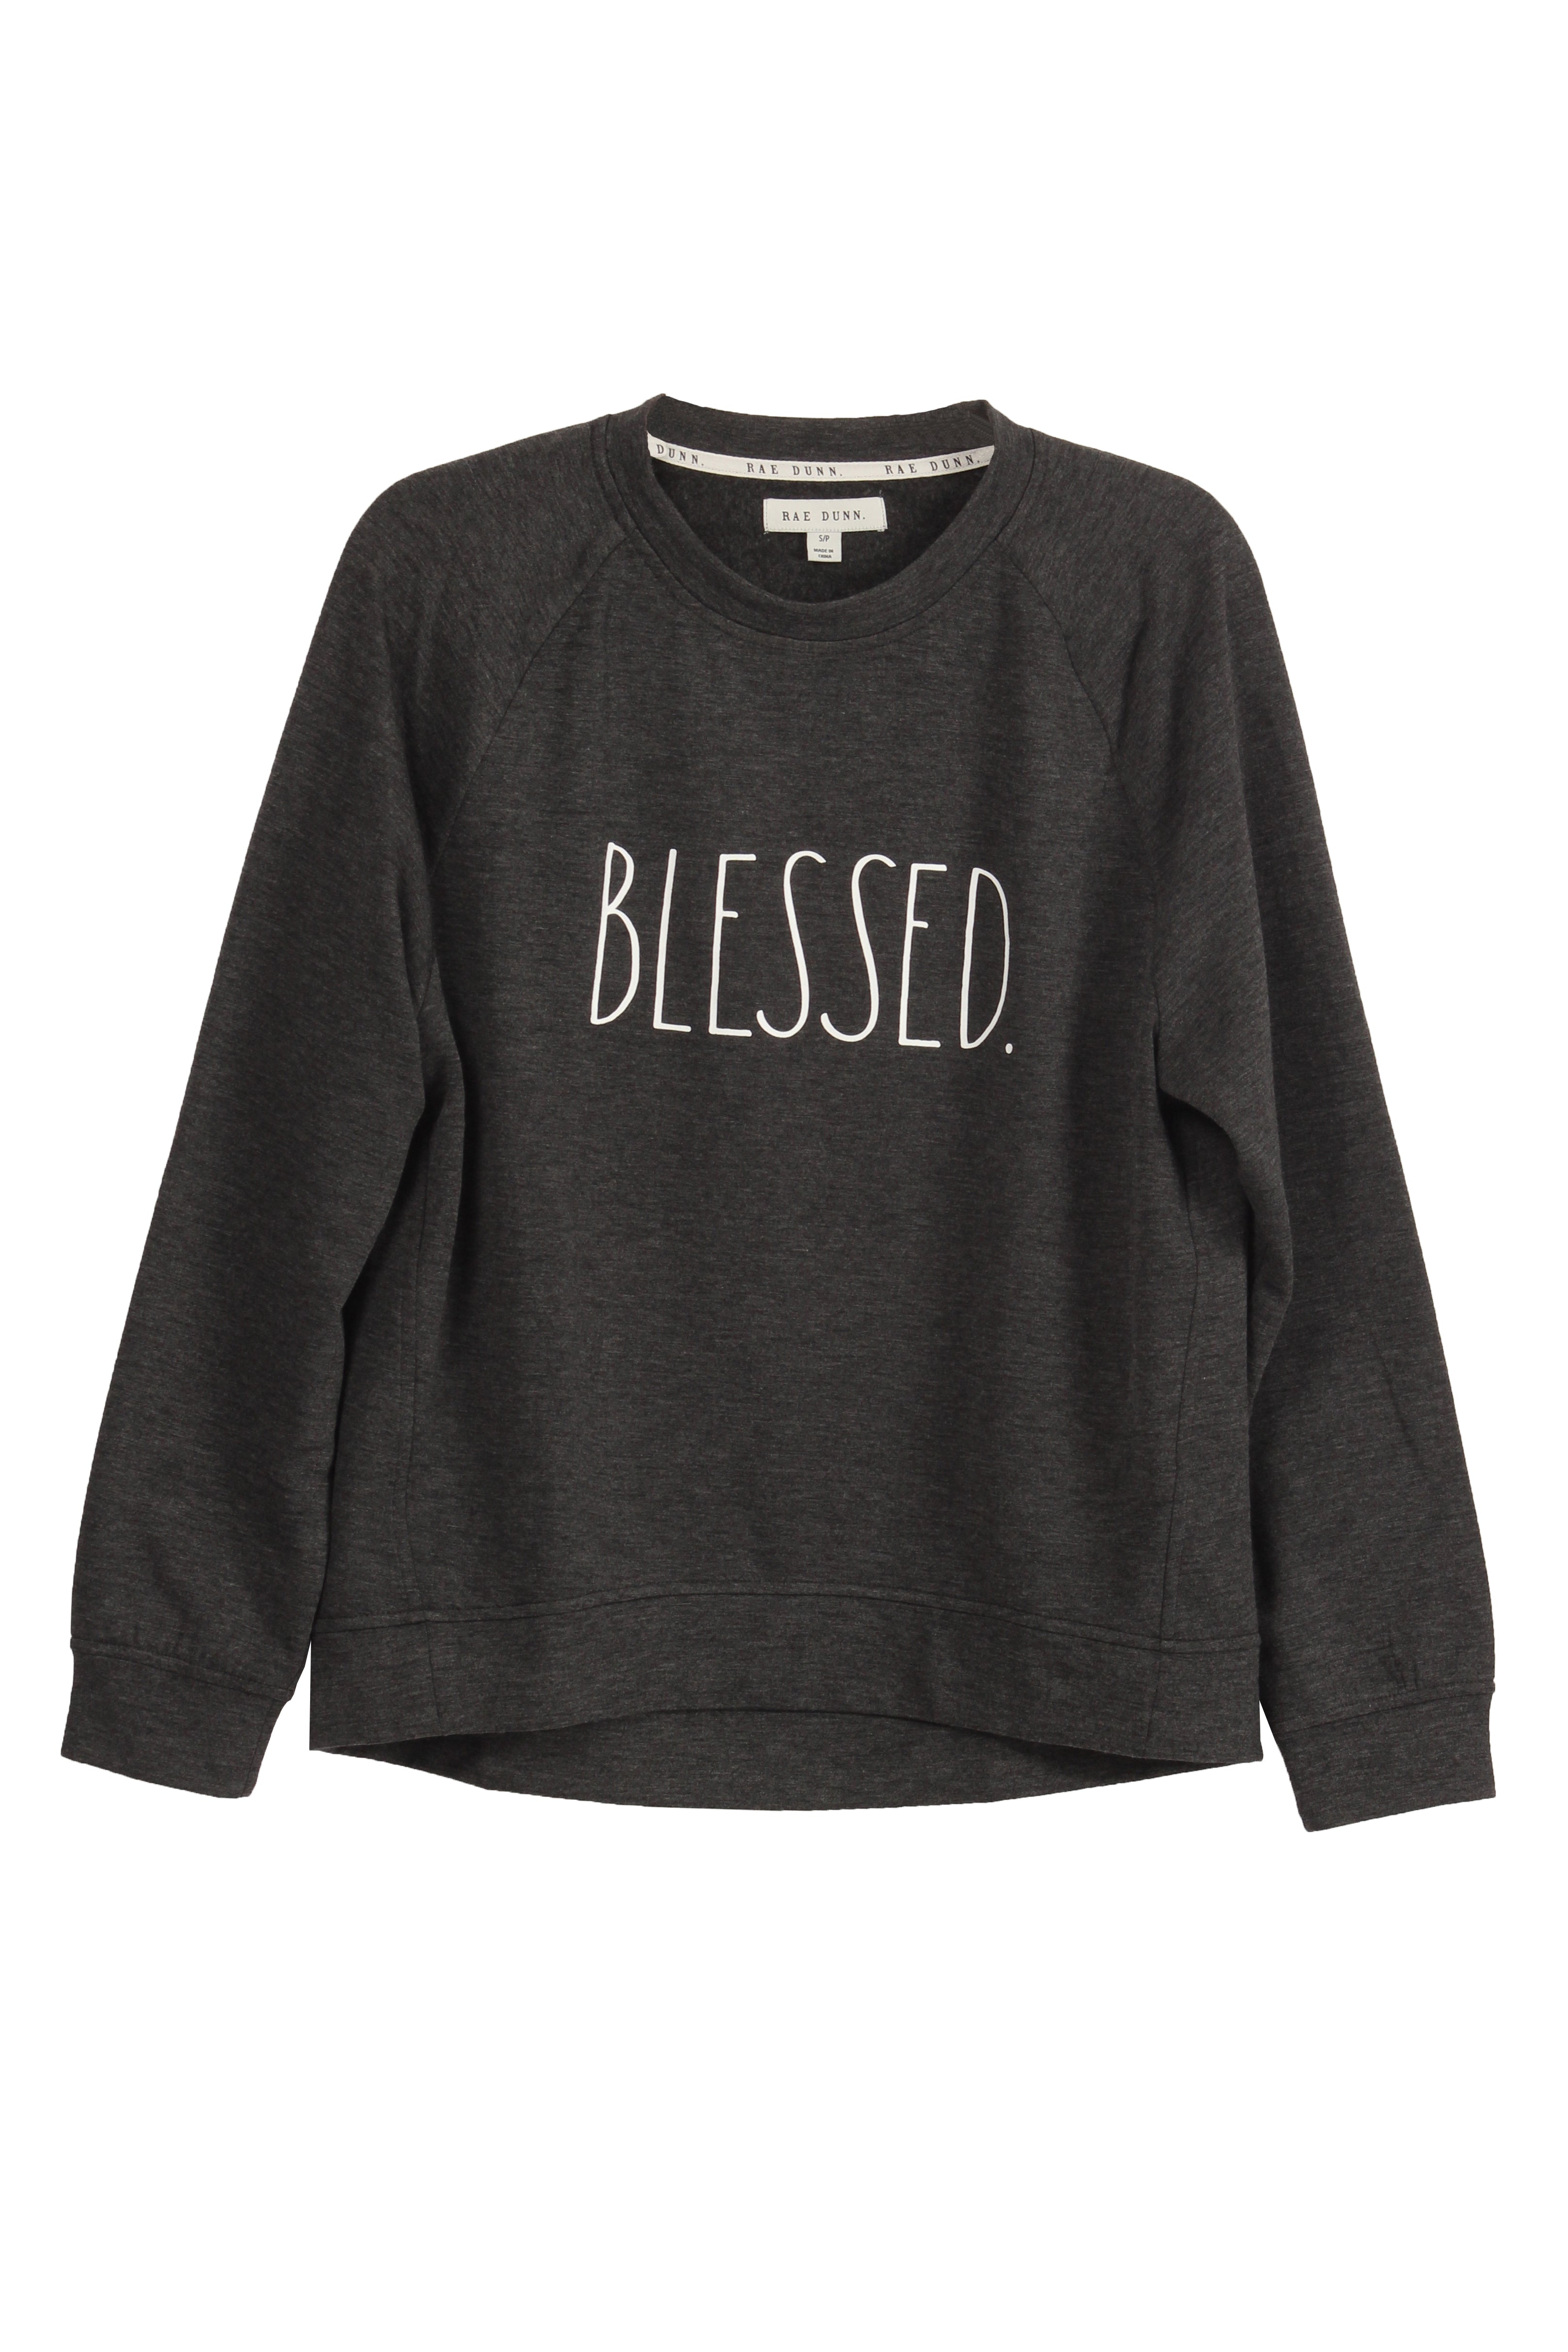 Women's "BLESSED" Long Sleeve Studio Raglan Sweatshirt - Shop Rae Dunn Apparel and Sleepwear